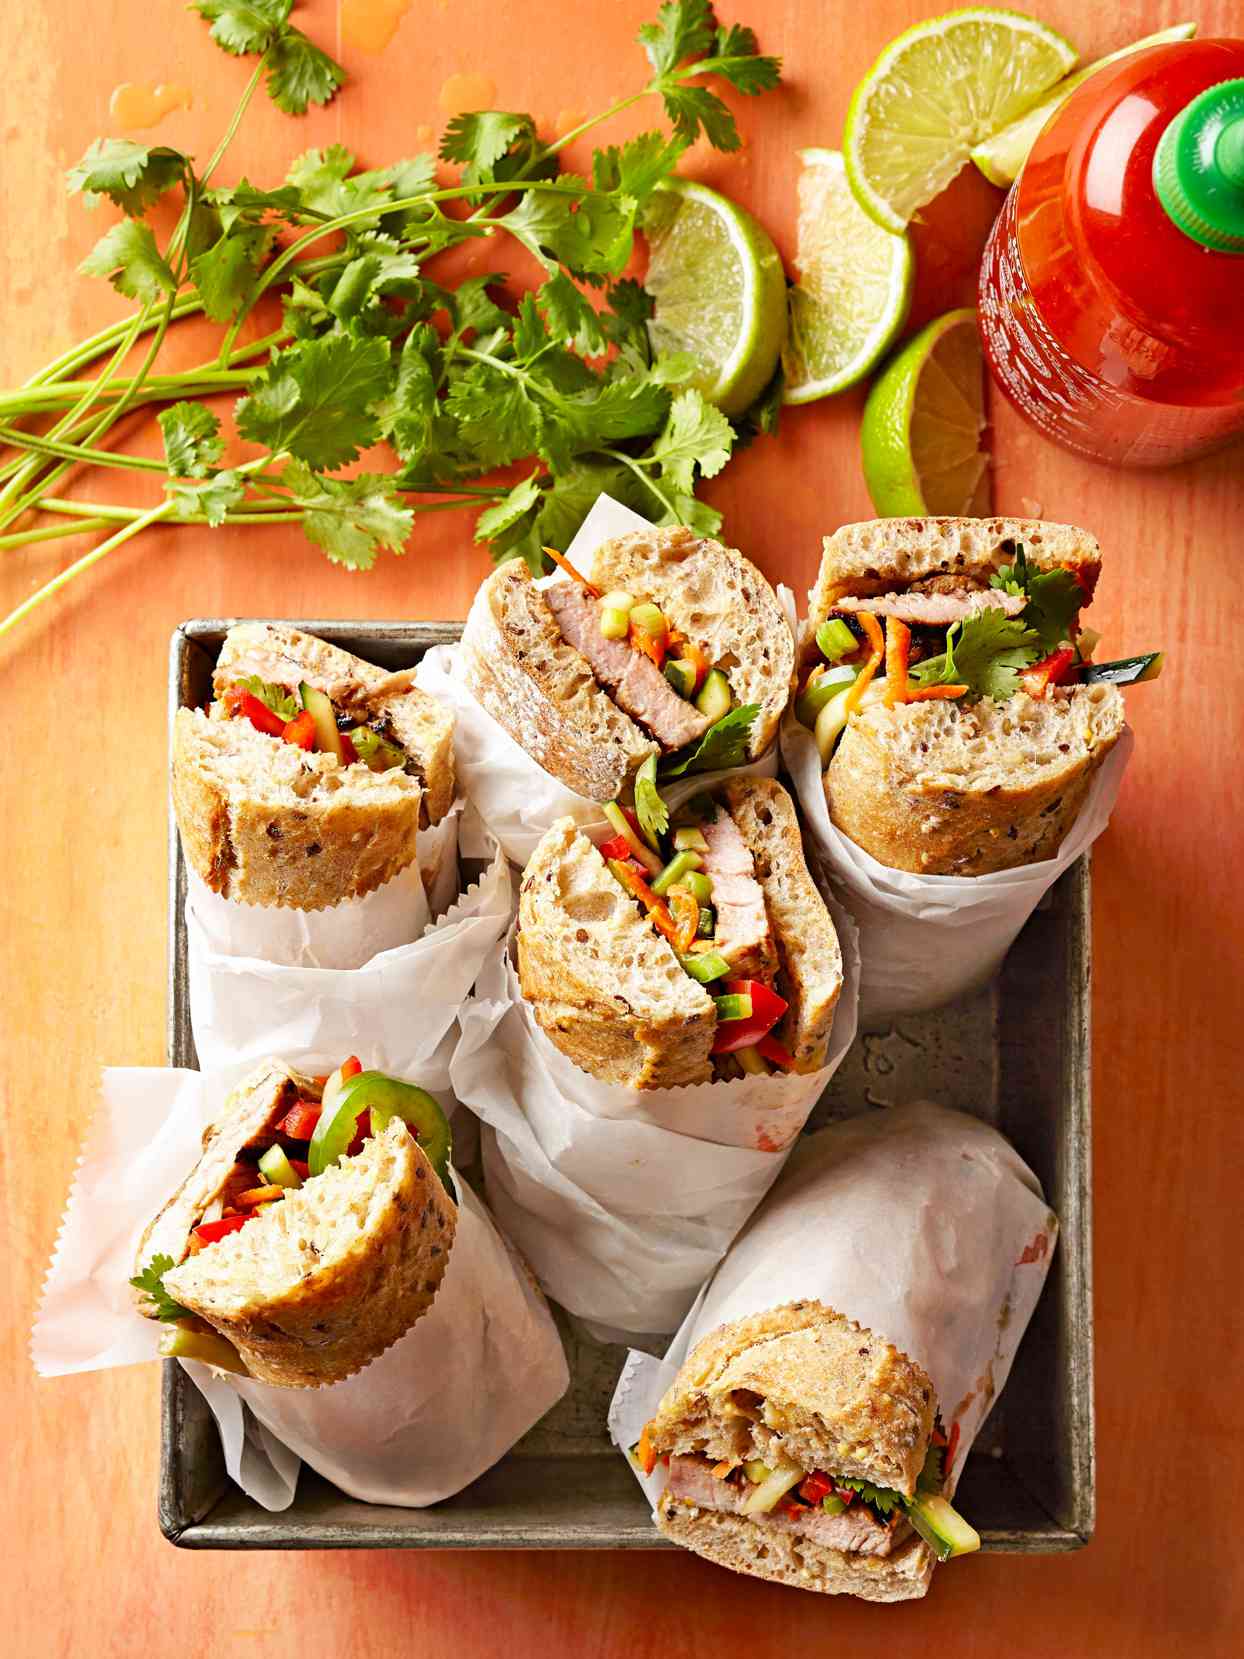 Banh Mi Vietnamese Sandwiches